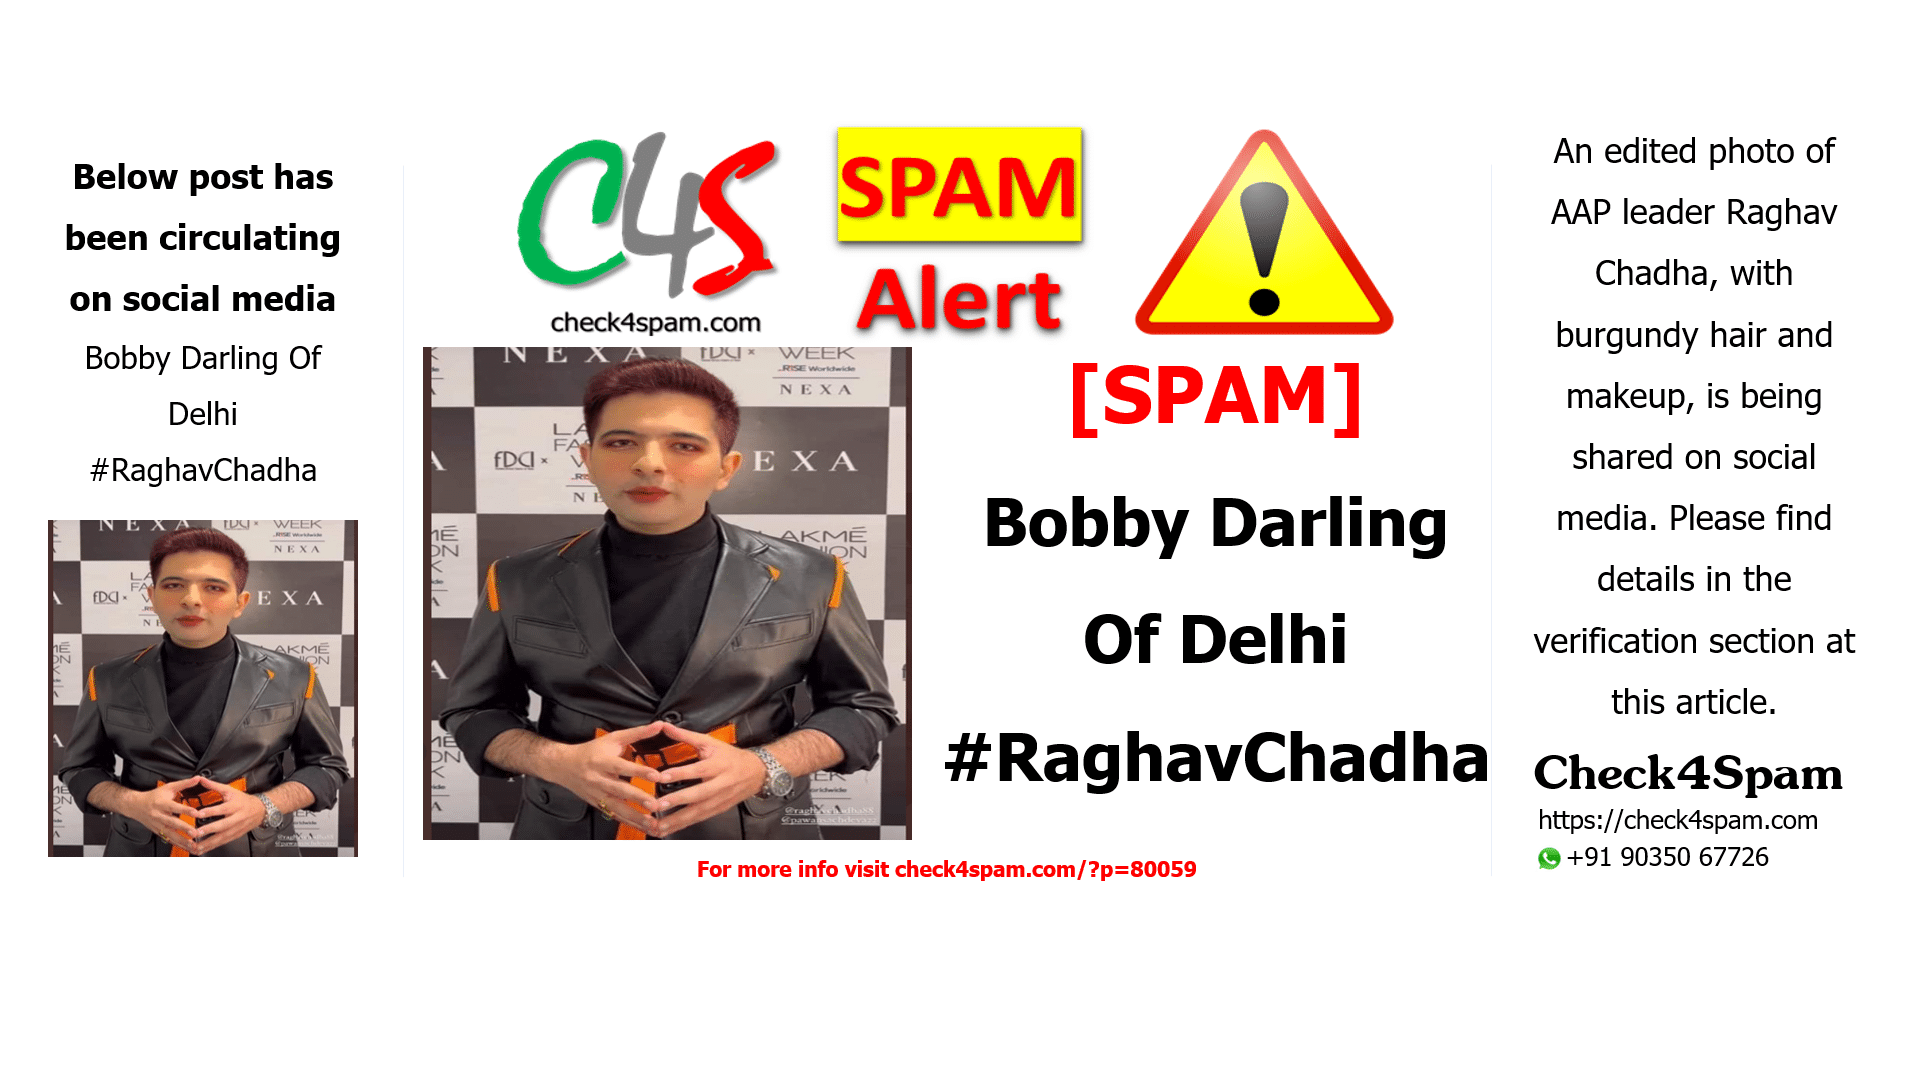 Bobby Darling Of Delhi #RaghavChadha